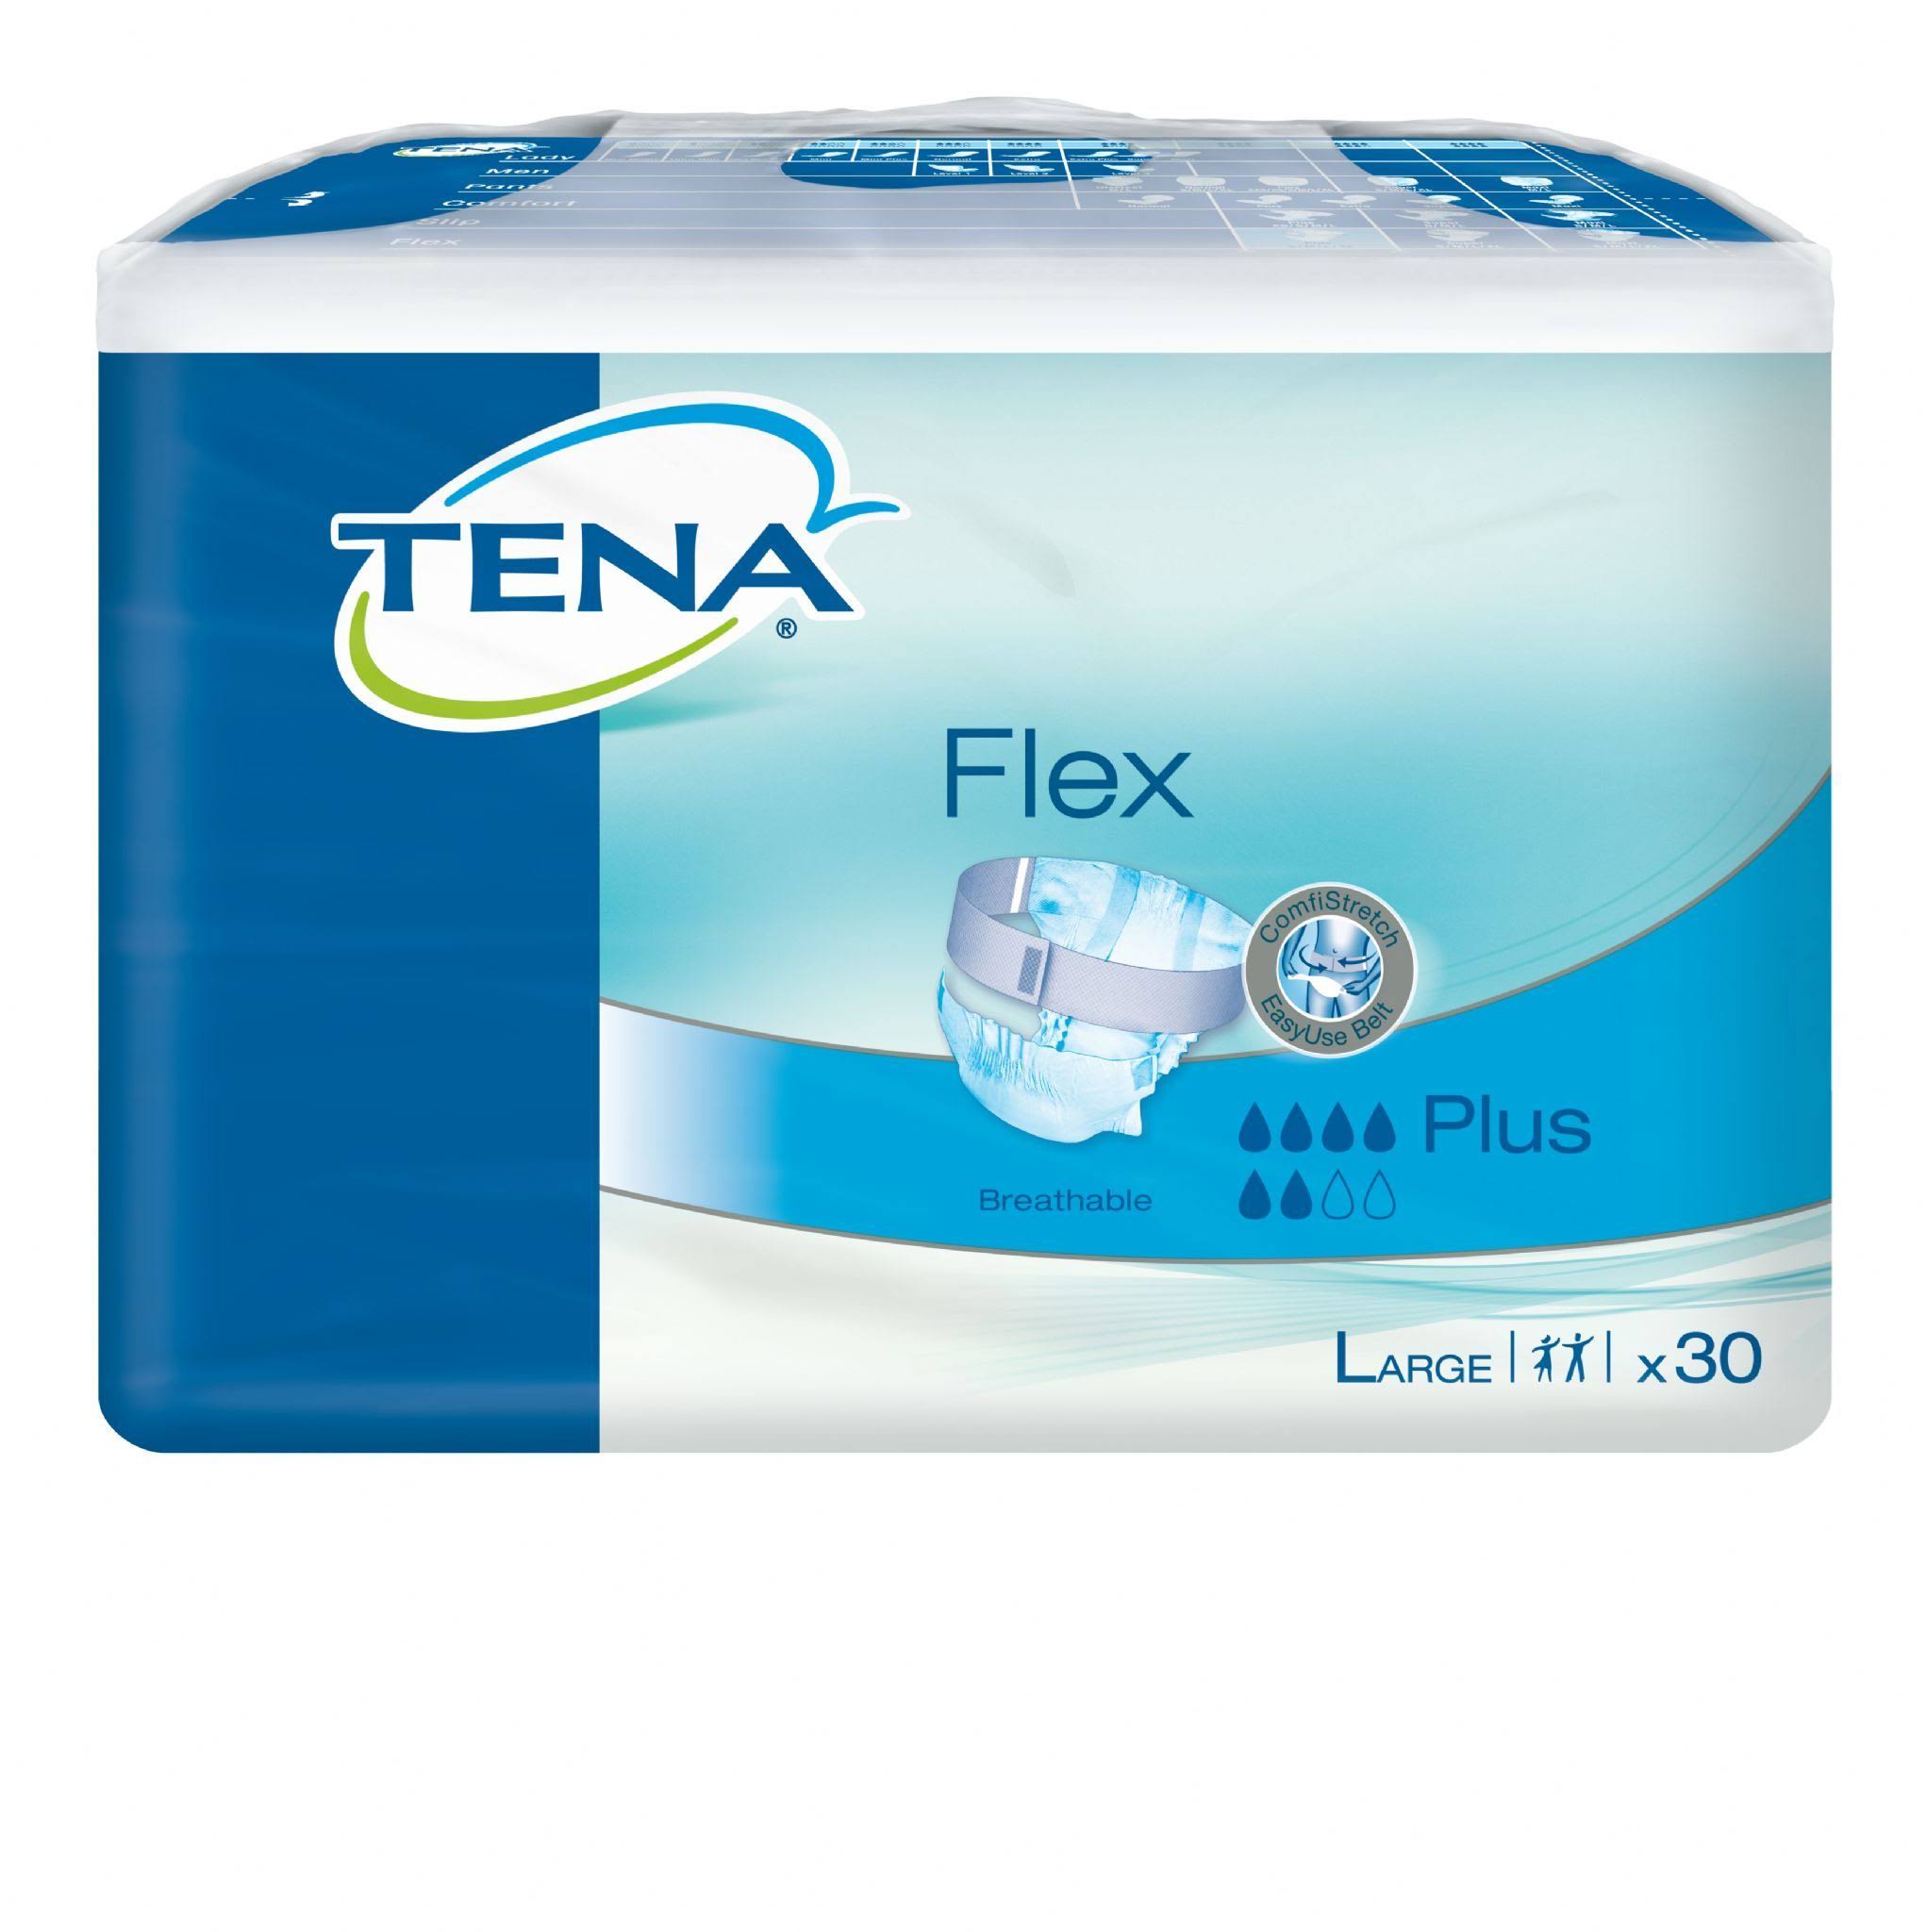 Tena Flex Plus Incontinence Pads - Large, 30 Pack